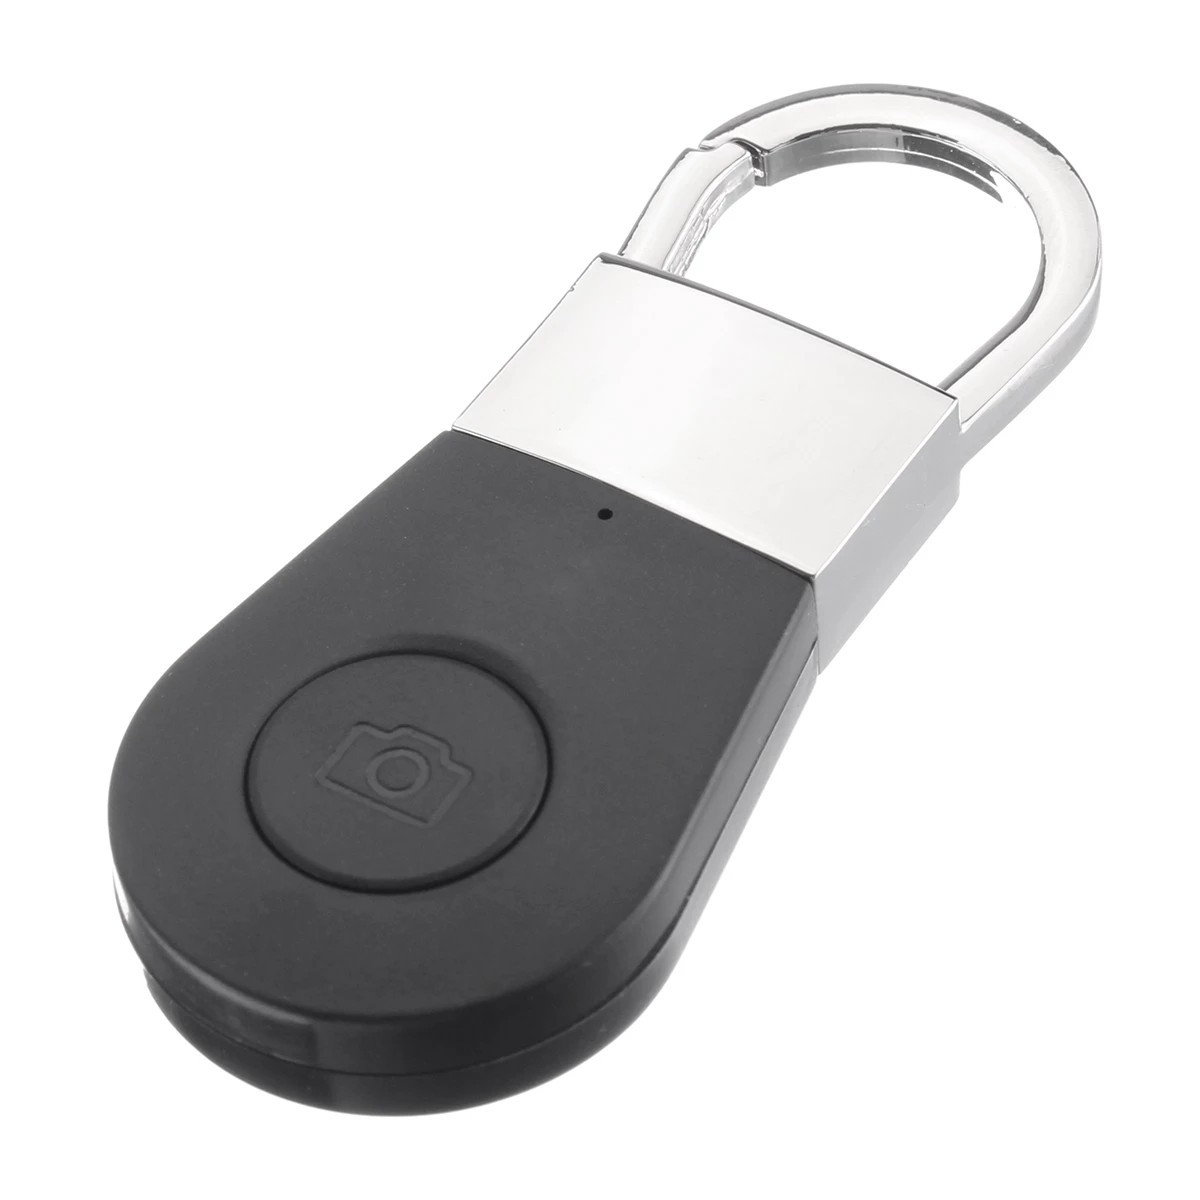 Key finder - bluetooth tražilica ključeva, mobitela itd